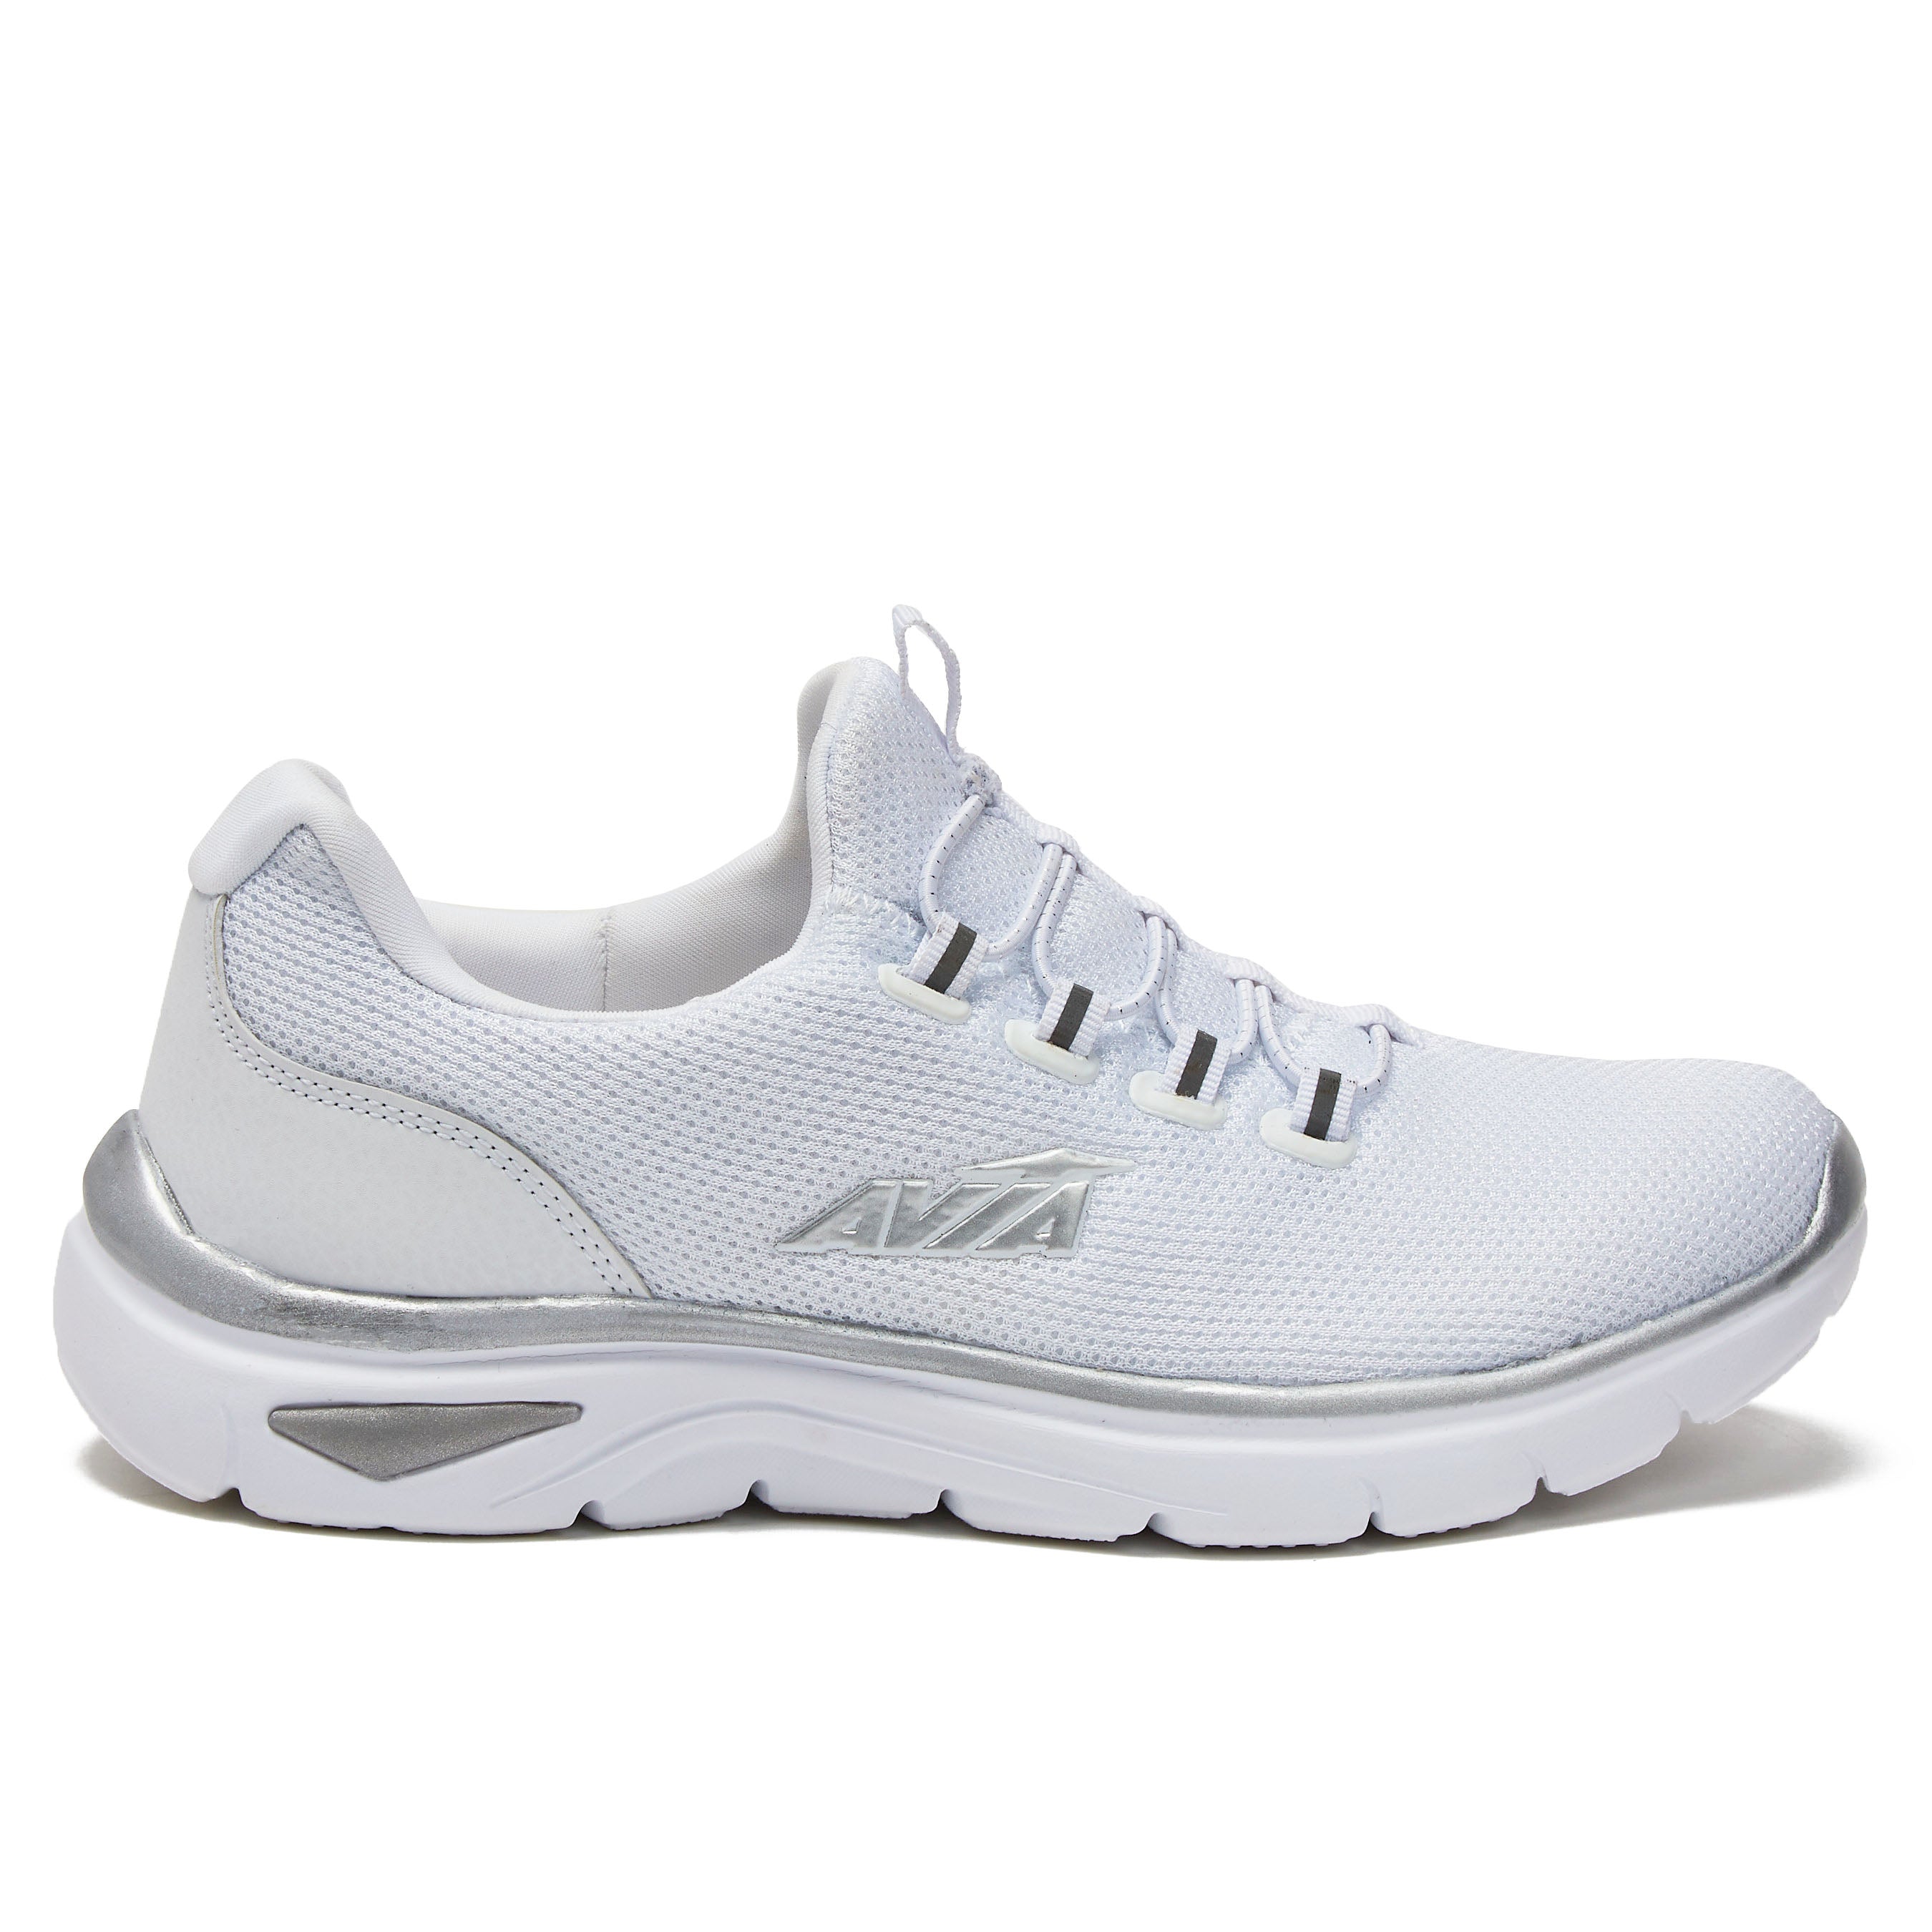 Avia Women's 357 Walking White/Blue/Gray Shoes US 8.5